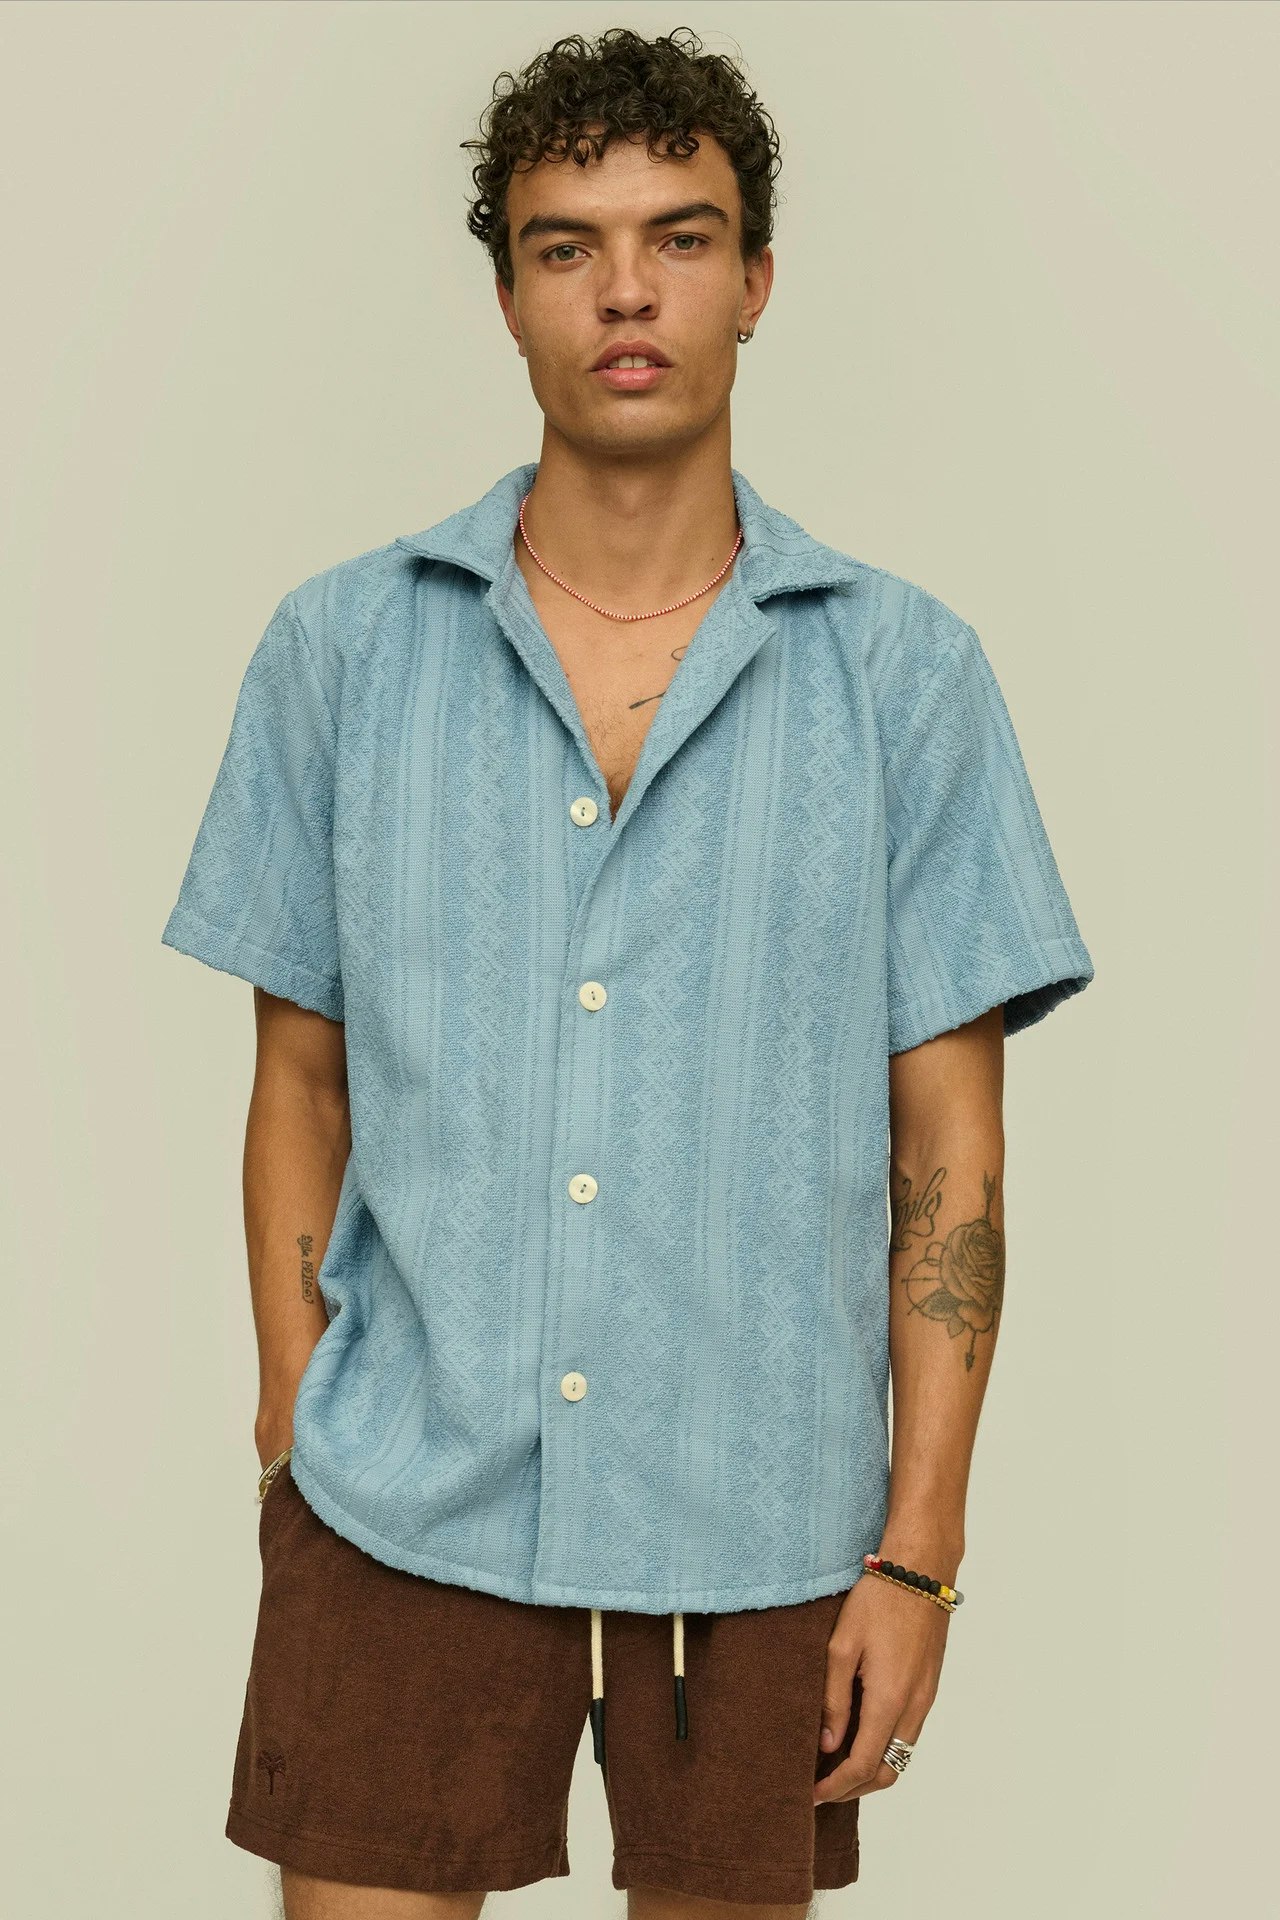 Oas Company - Ancora Cuba Terry Shirt